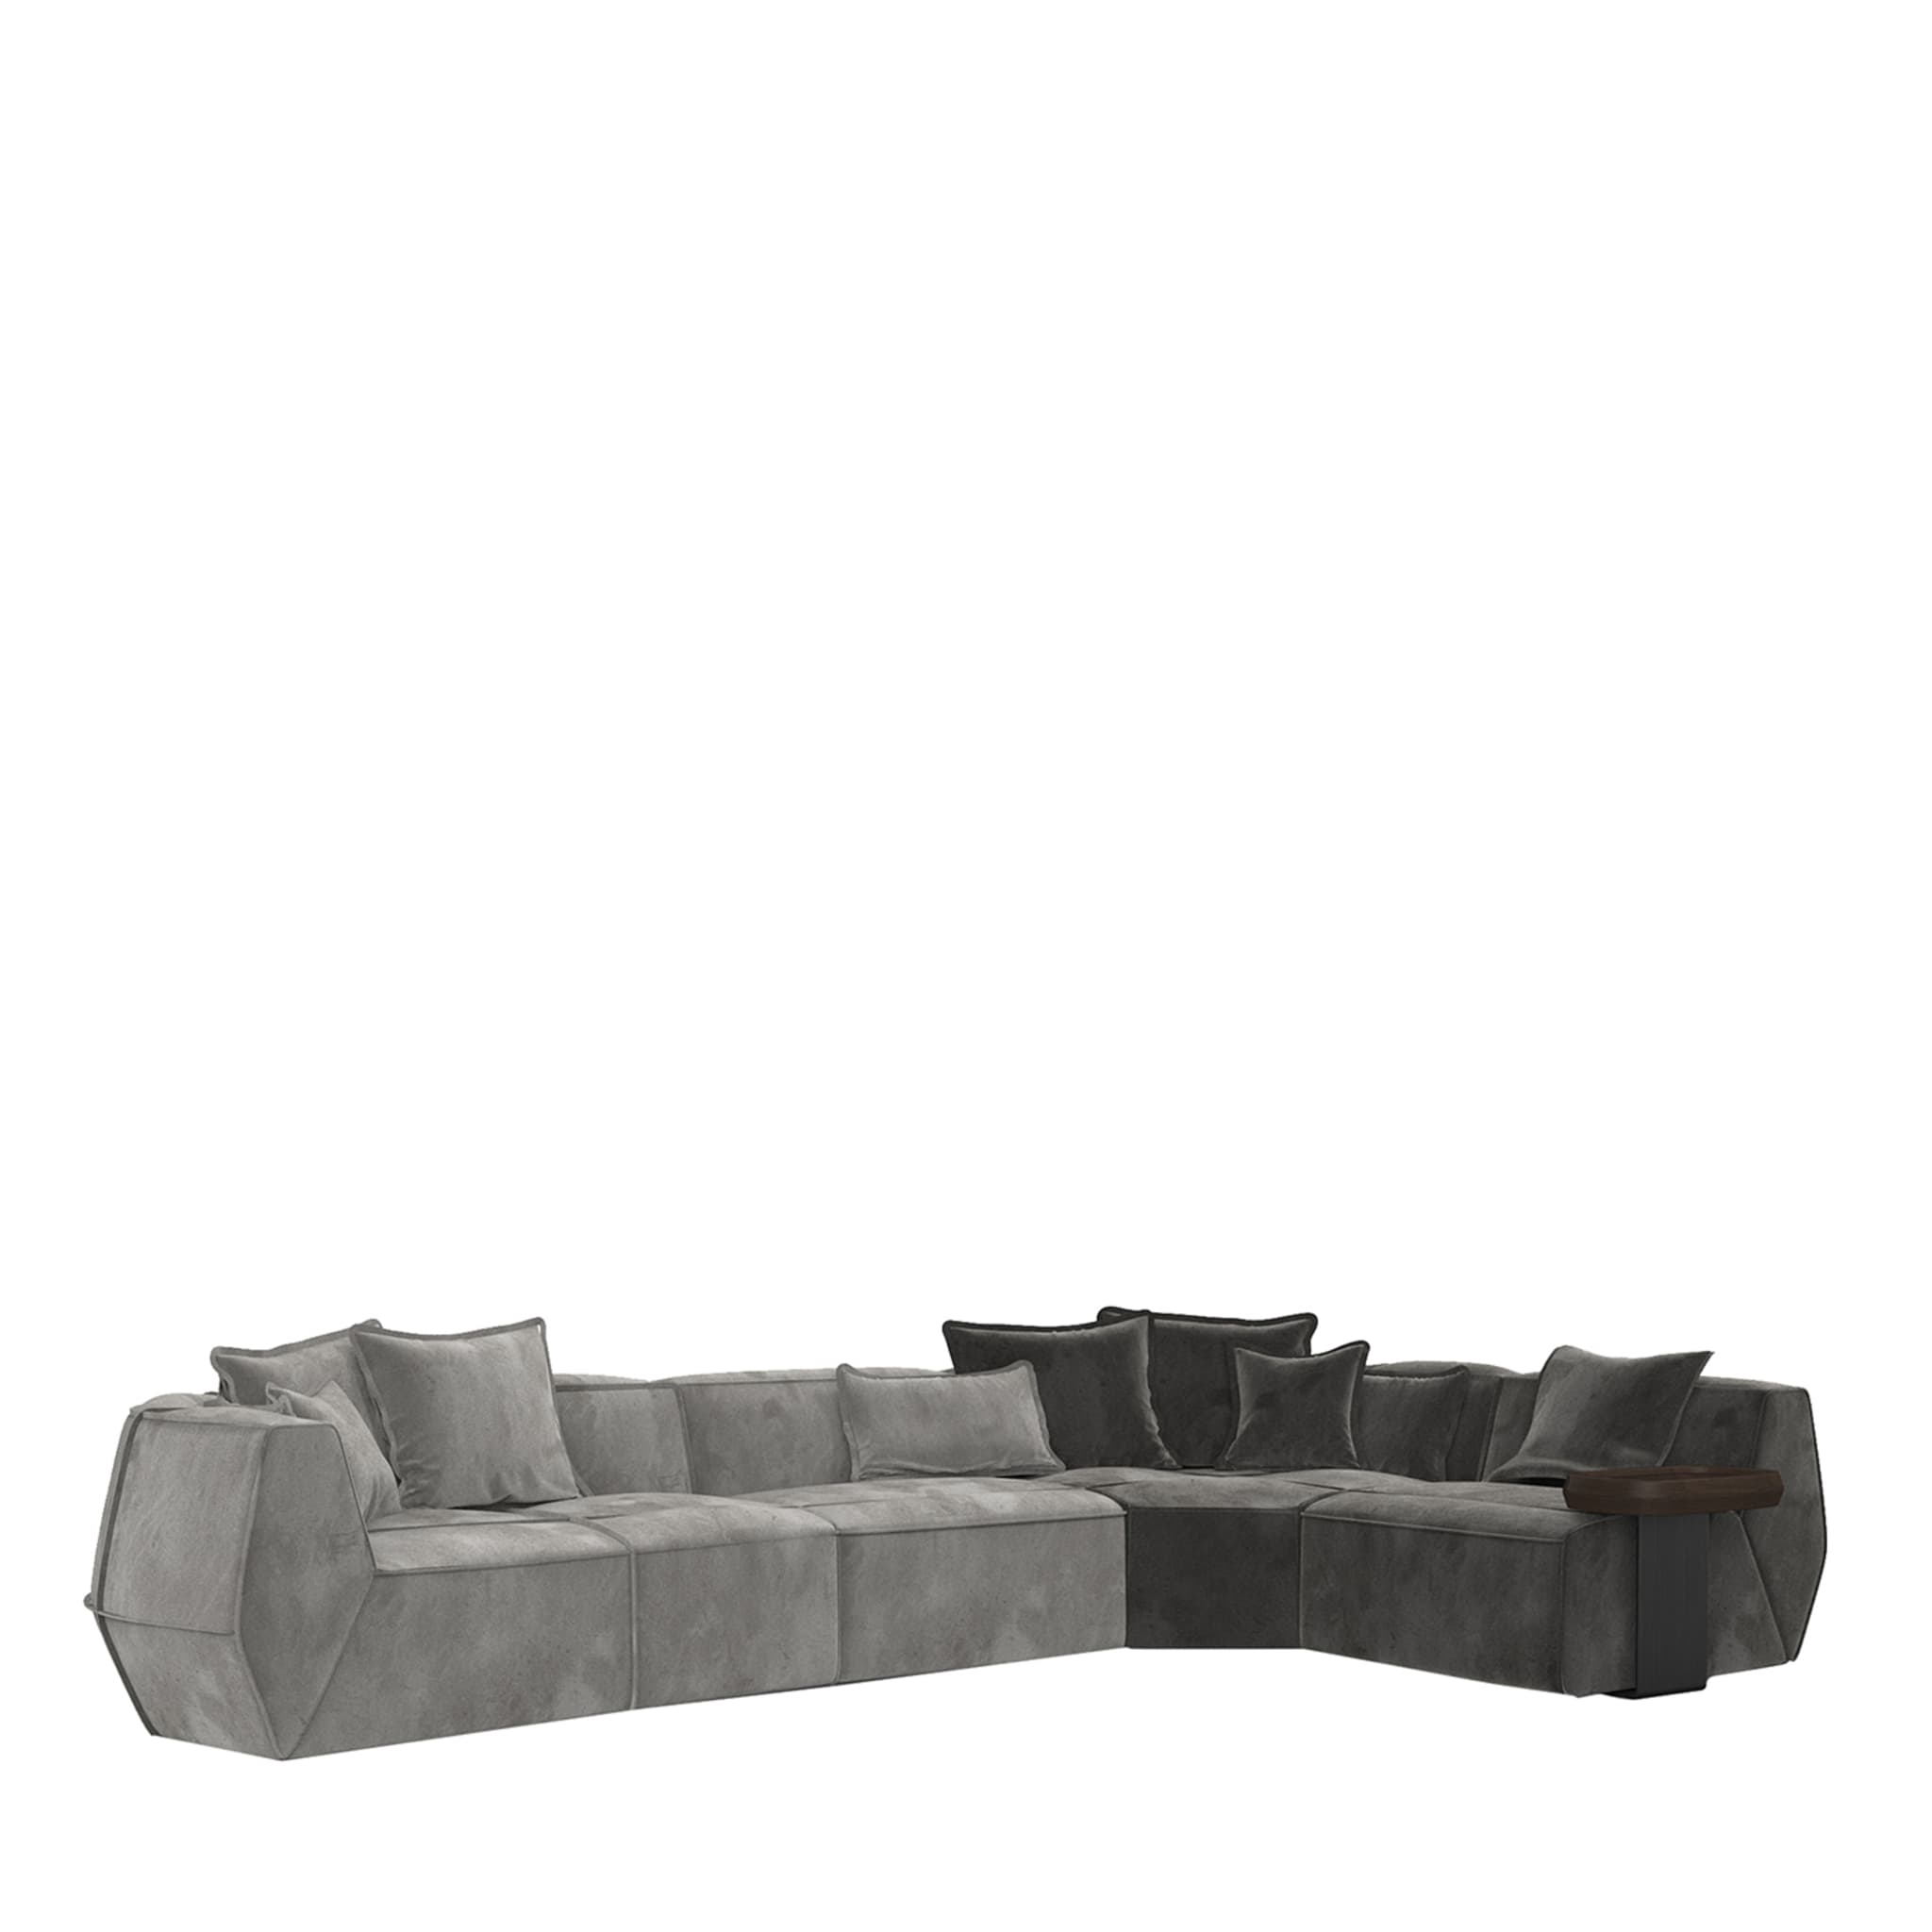 Infinito Two-Tone Gray Leather Sofa by Lorenza Bozzoli - Main view